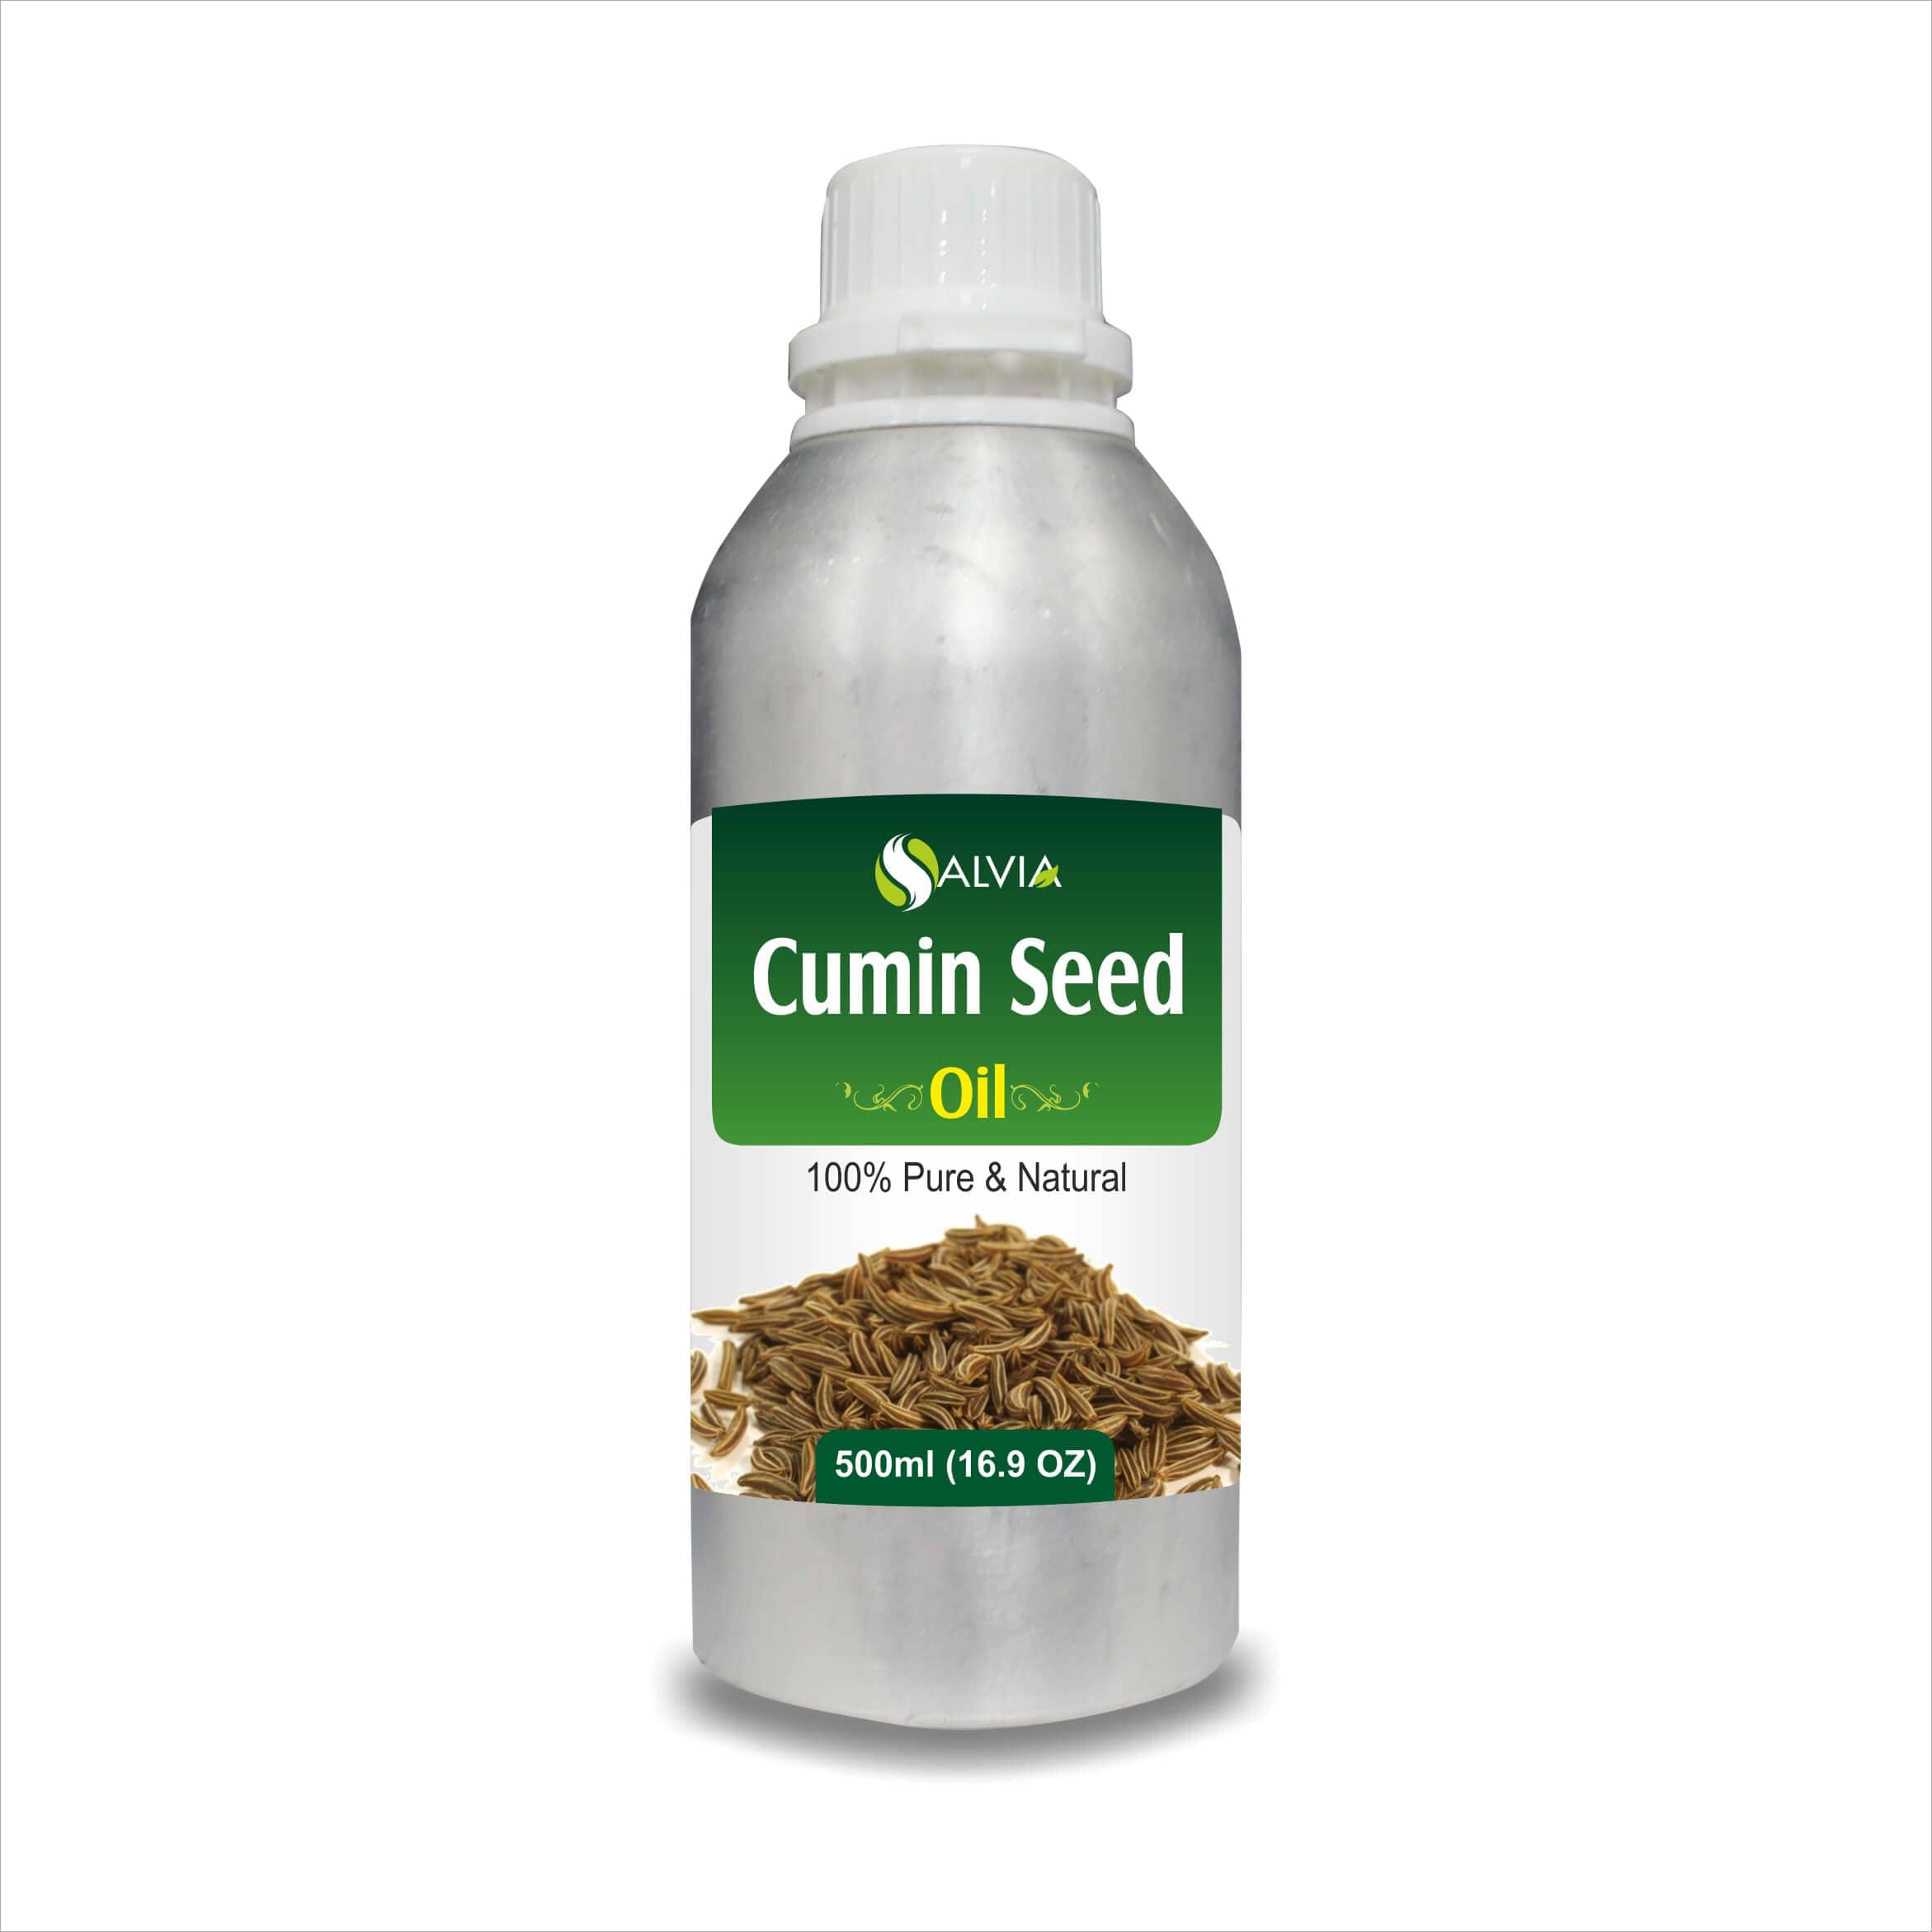 Salvia Natural Essential Oils 500ml Cumin Seed Oil (Cuminum Cyminum) 100% Natural Pure Essential Oil